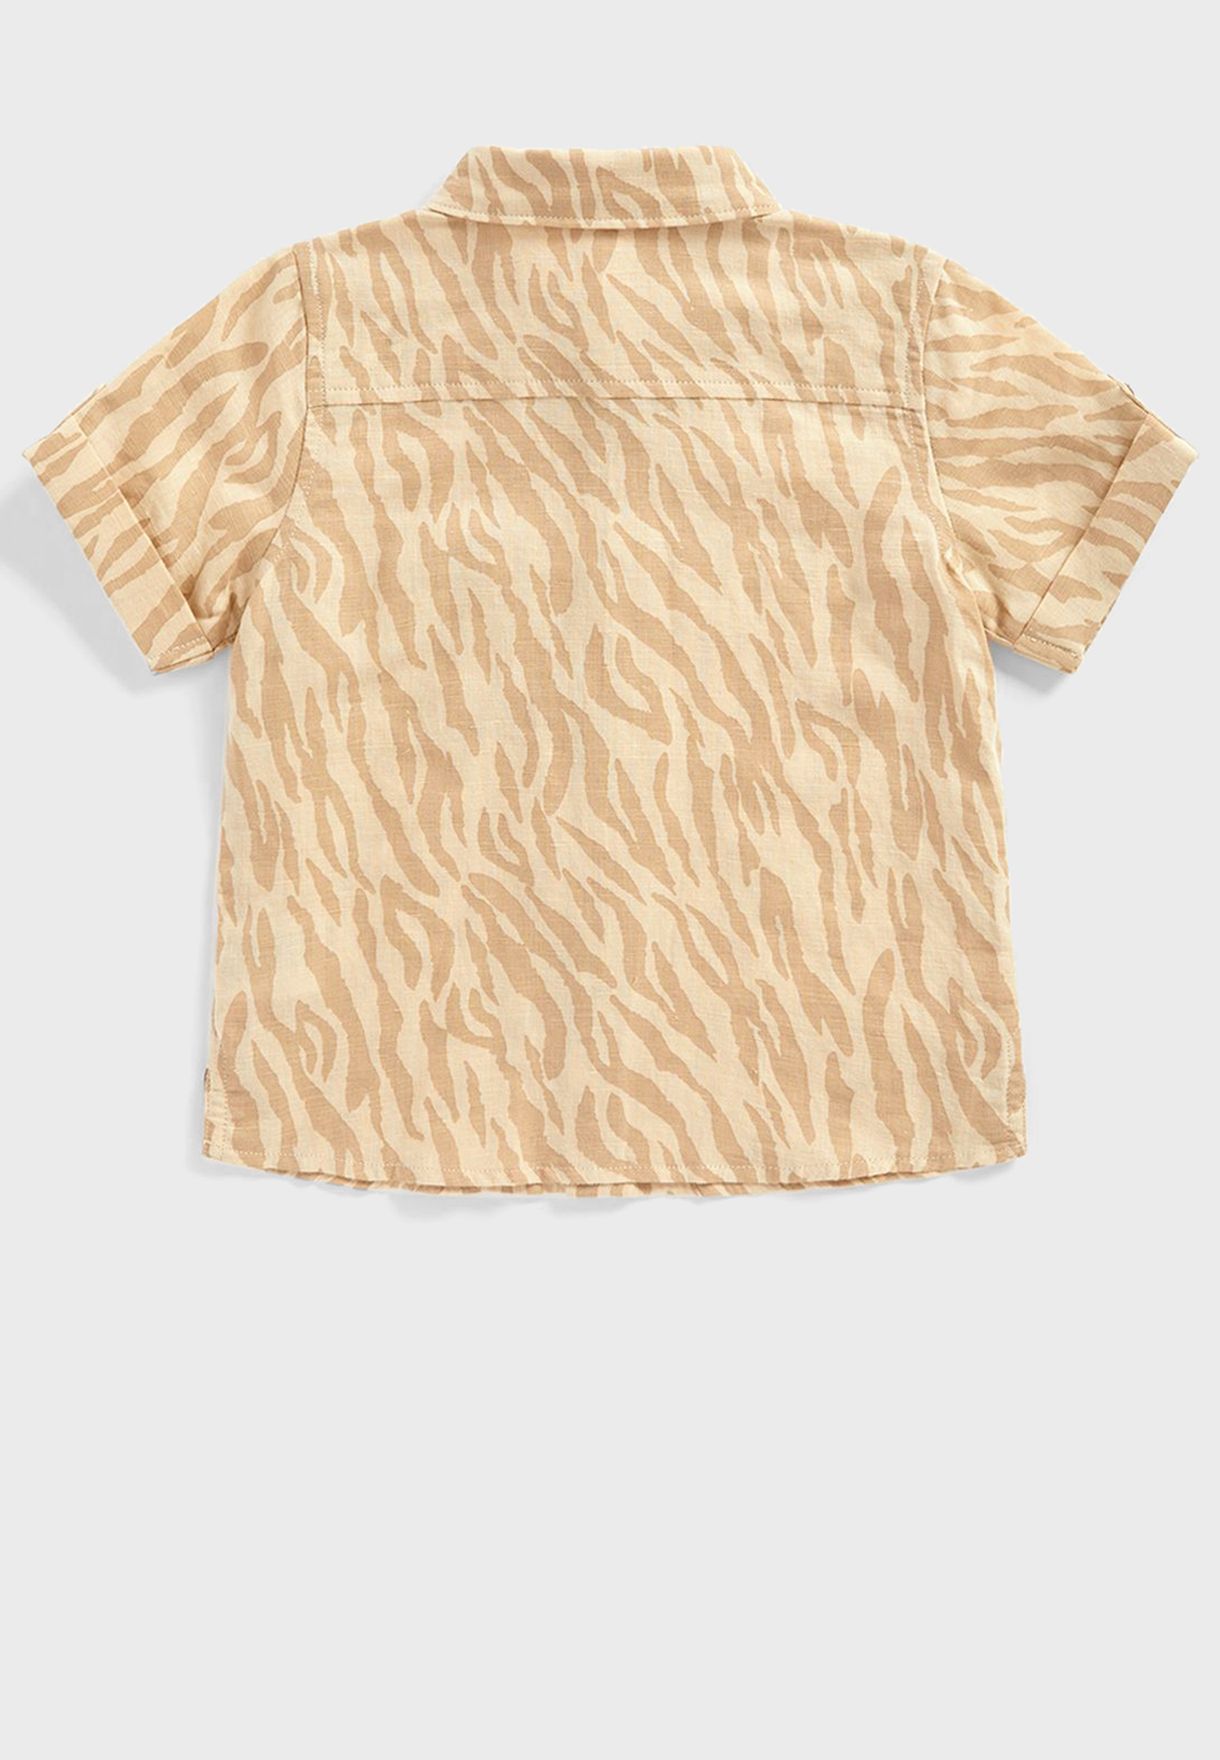 Kids Zebra Print Shirt